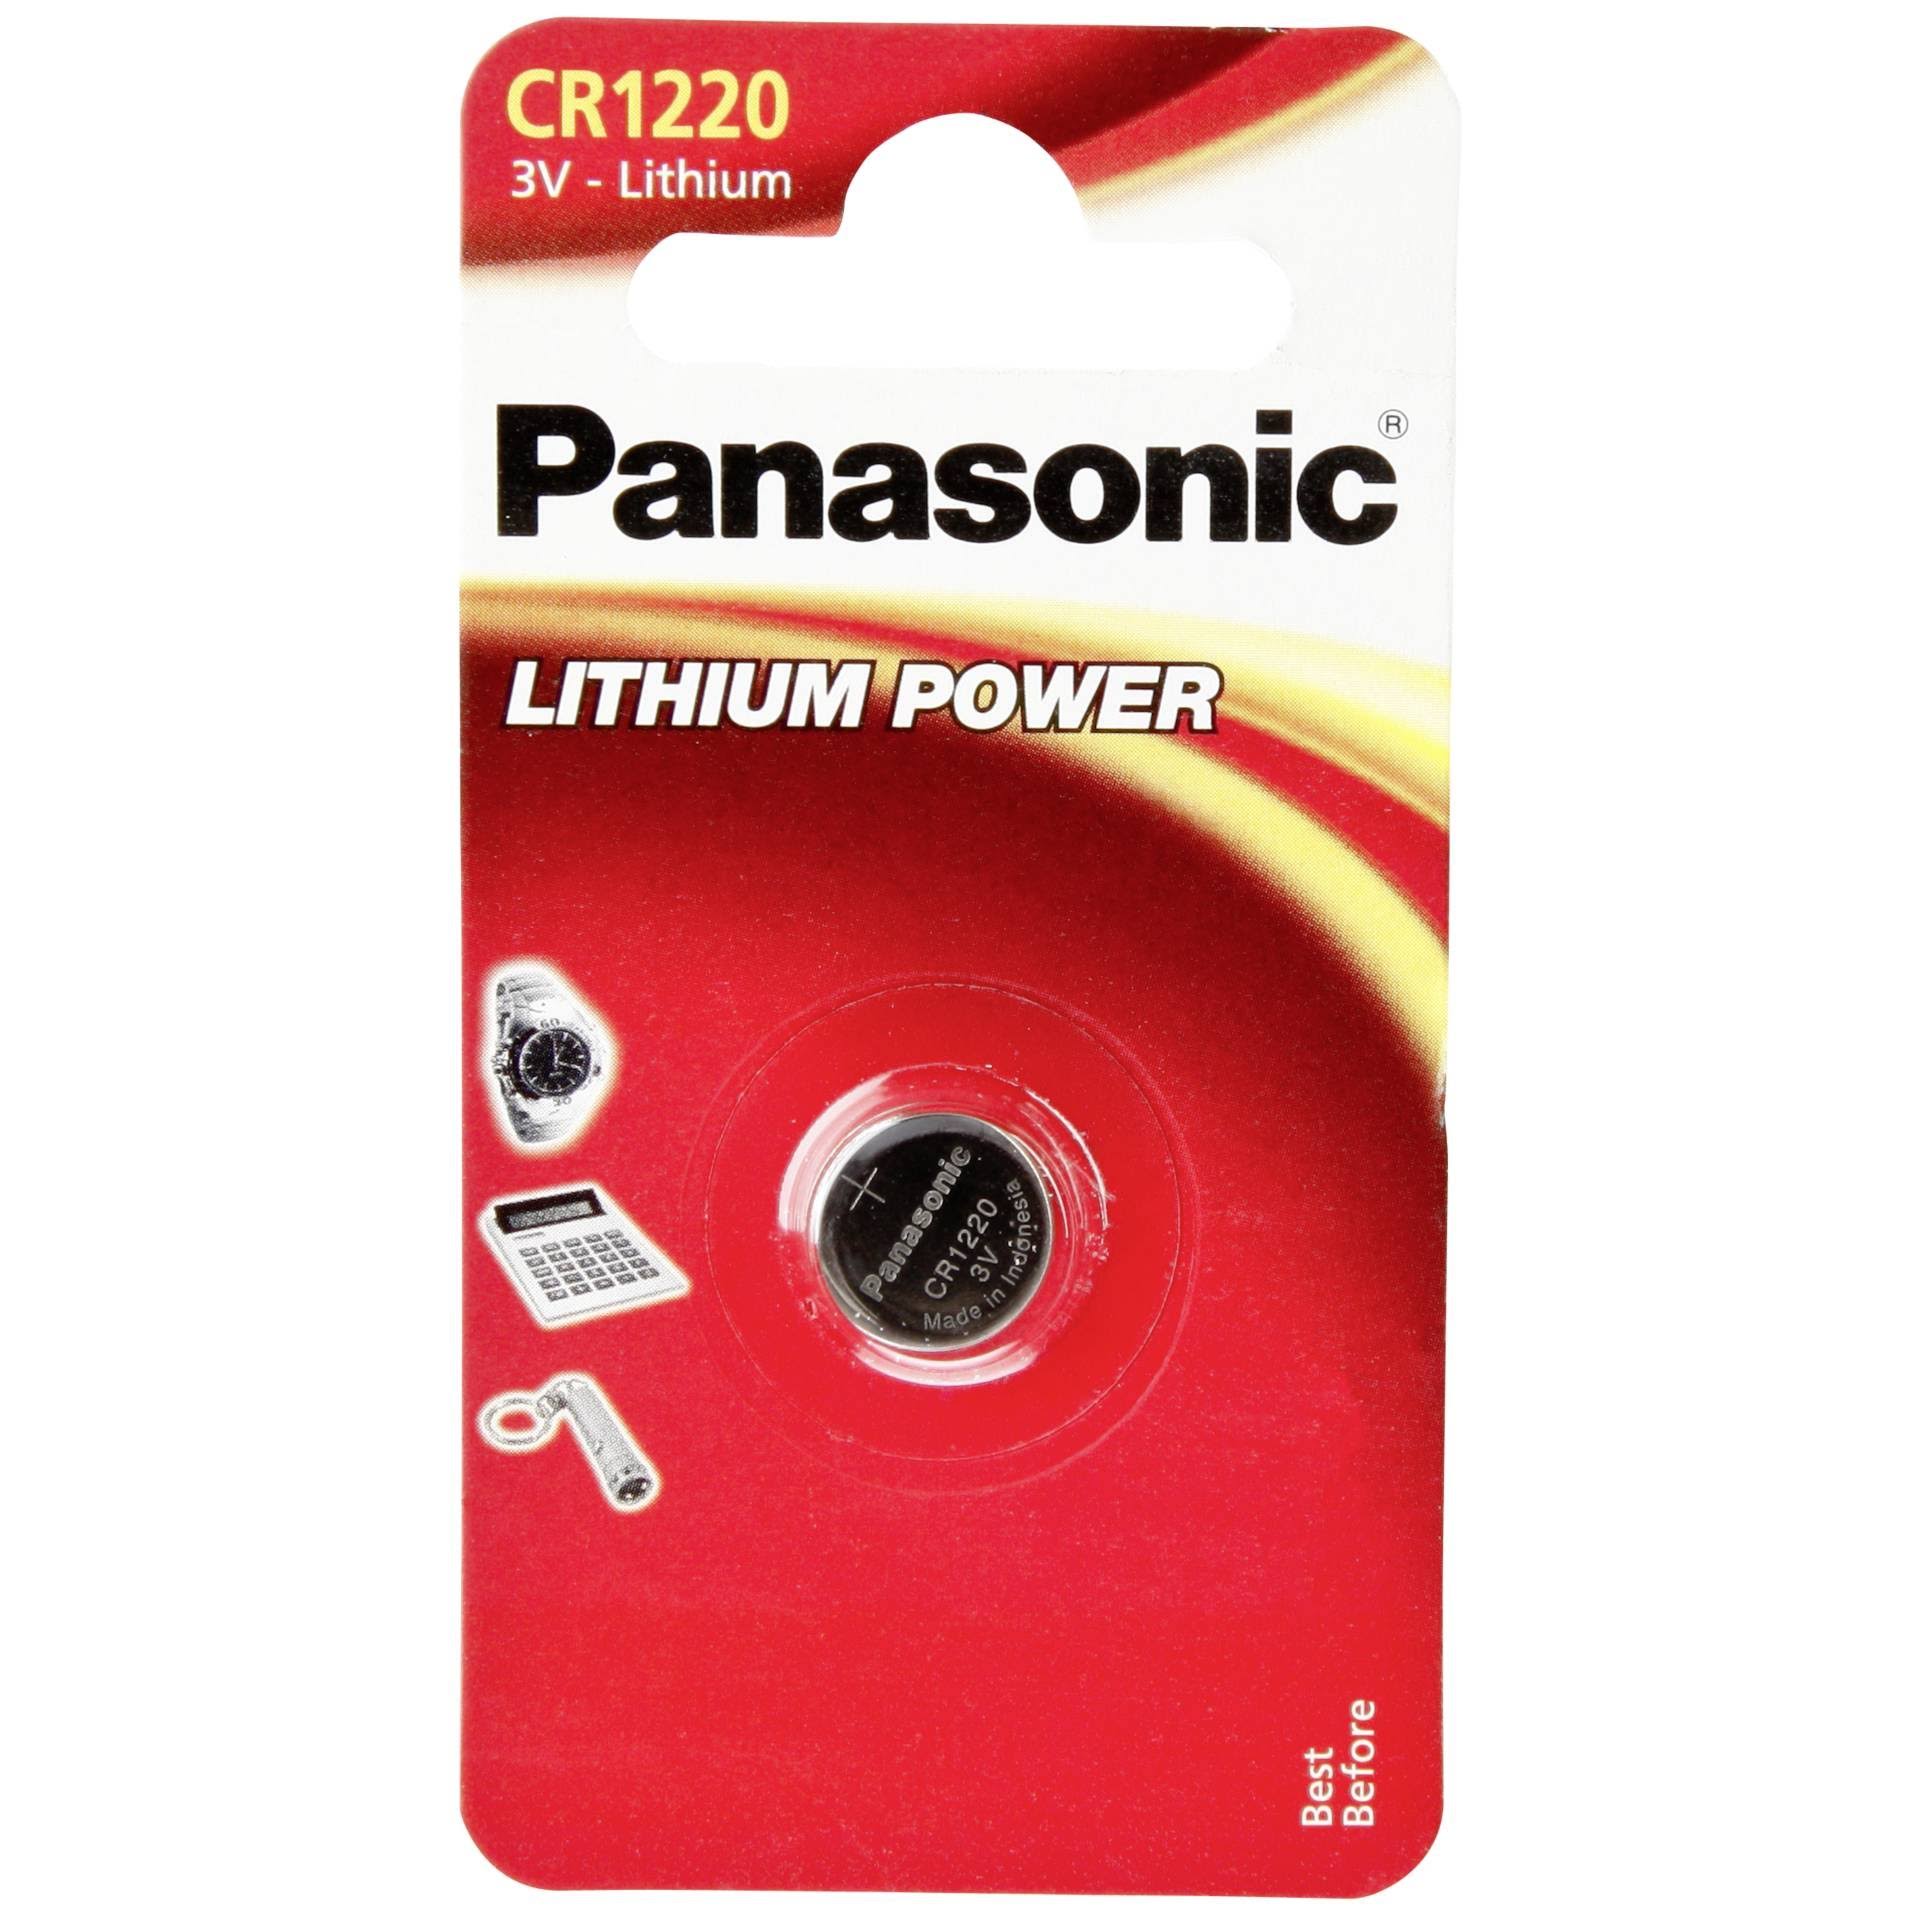 Panasonic 1 CR 1220 Lithium Power Batteries Silver